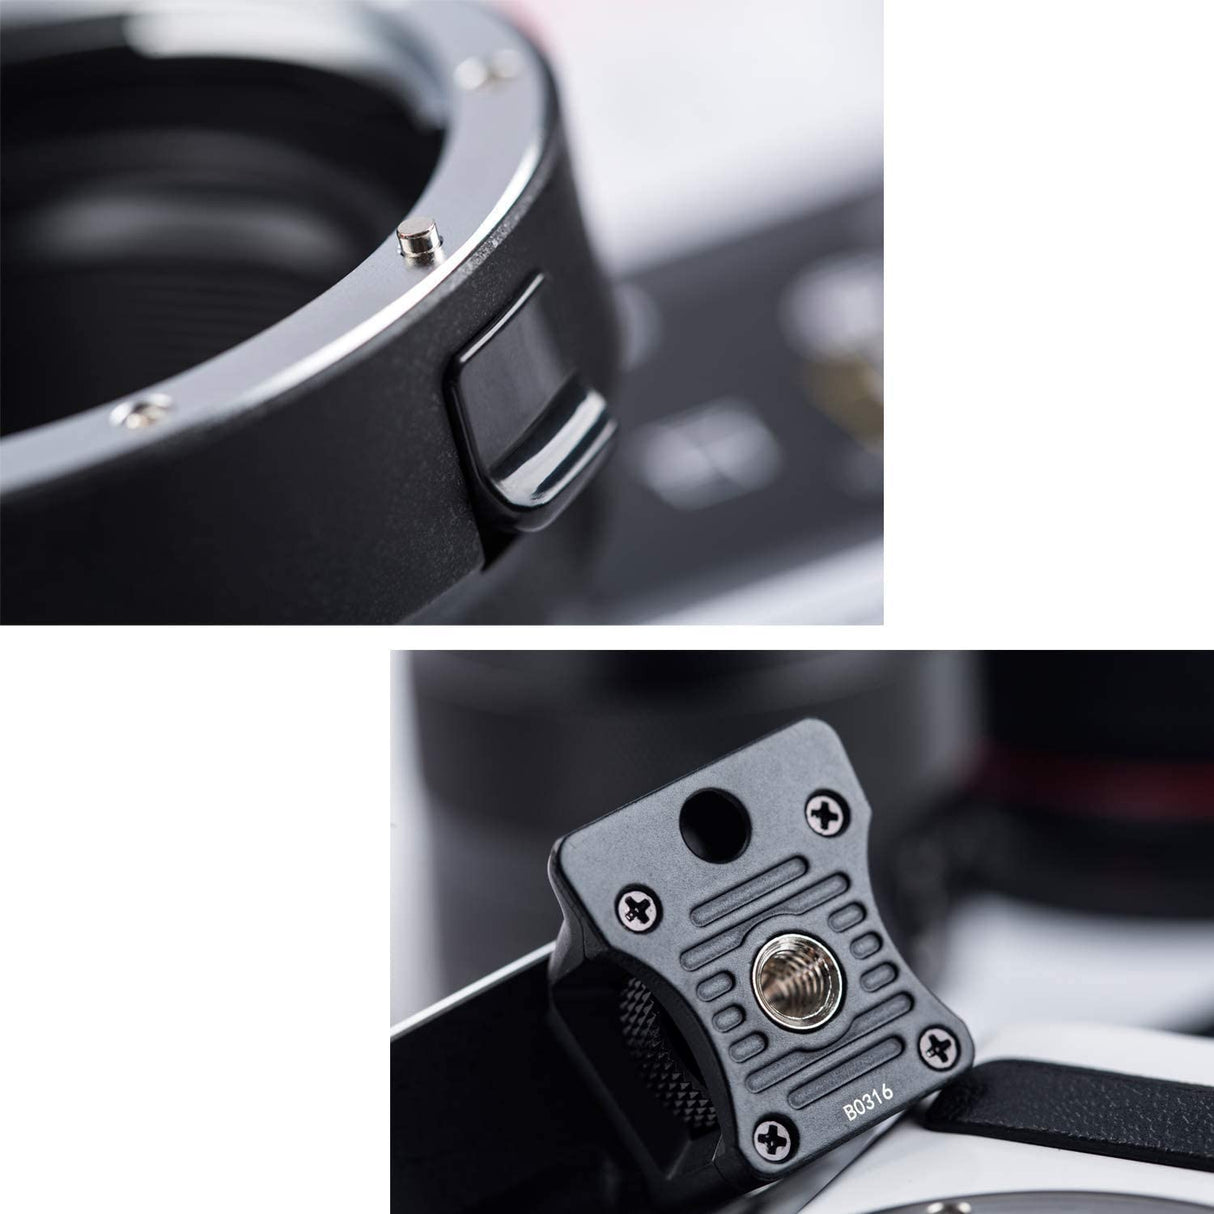 Viltrox EOS M - Canon EF/EF-S adapter (avto fokus)